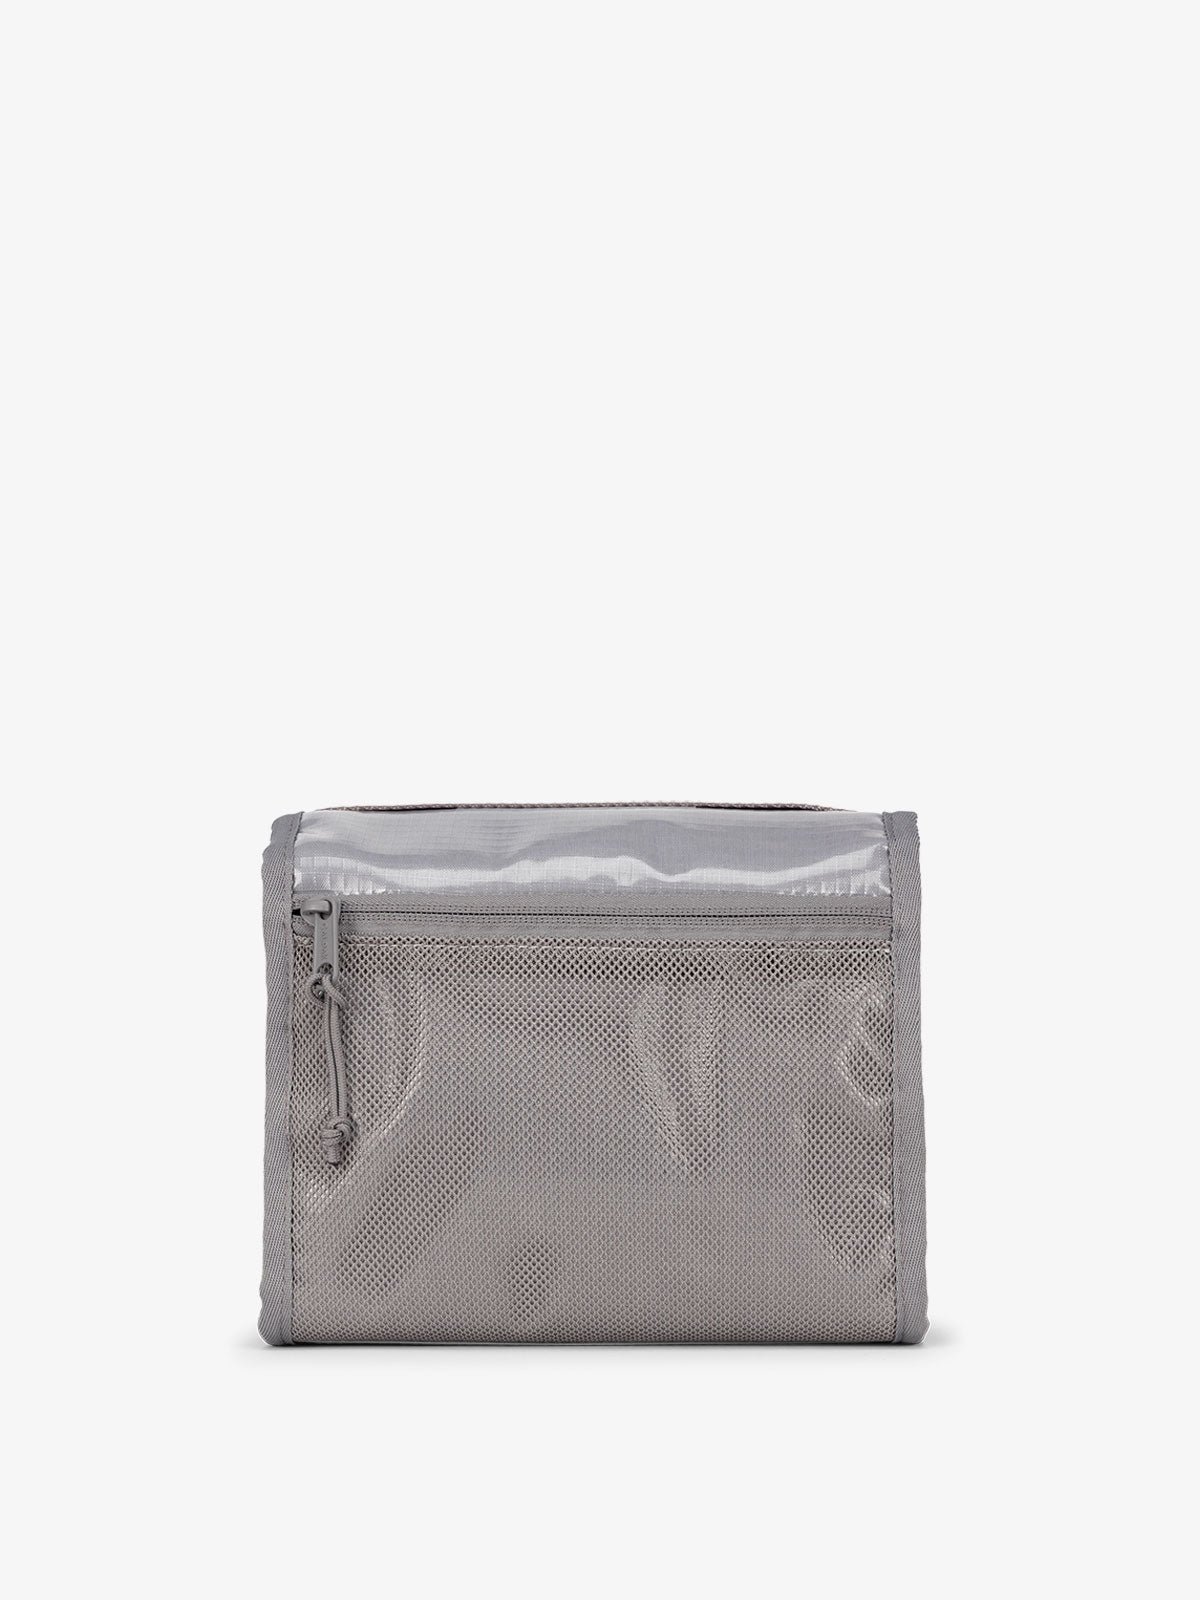 CALPAK water-resistant Terra Hanging Toiletry Bag and back mesh zippered pocket in gray storm